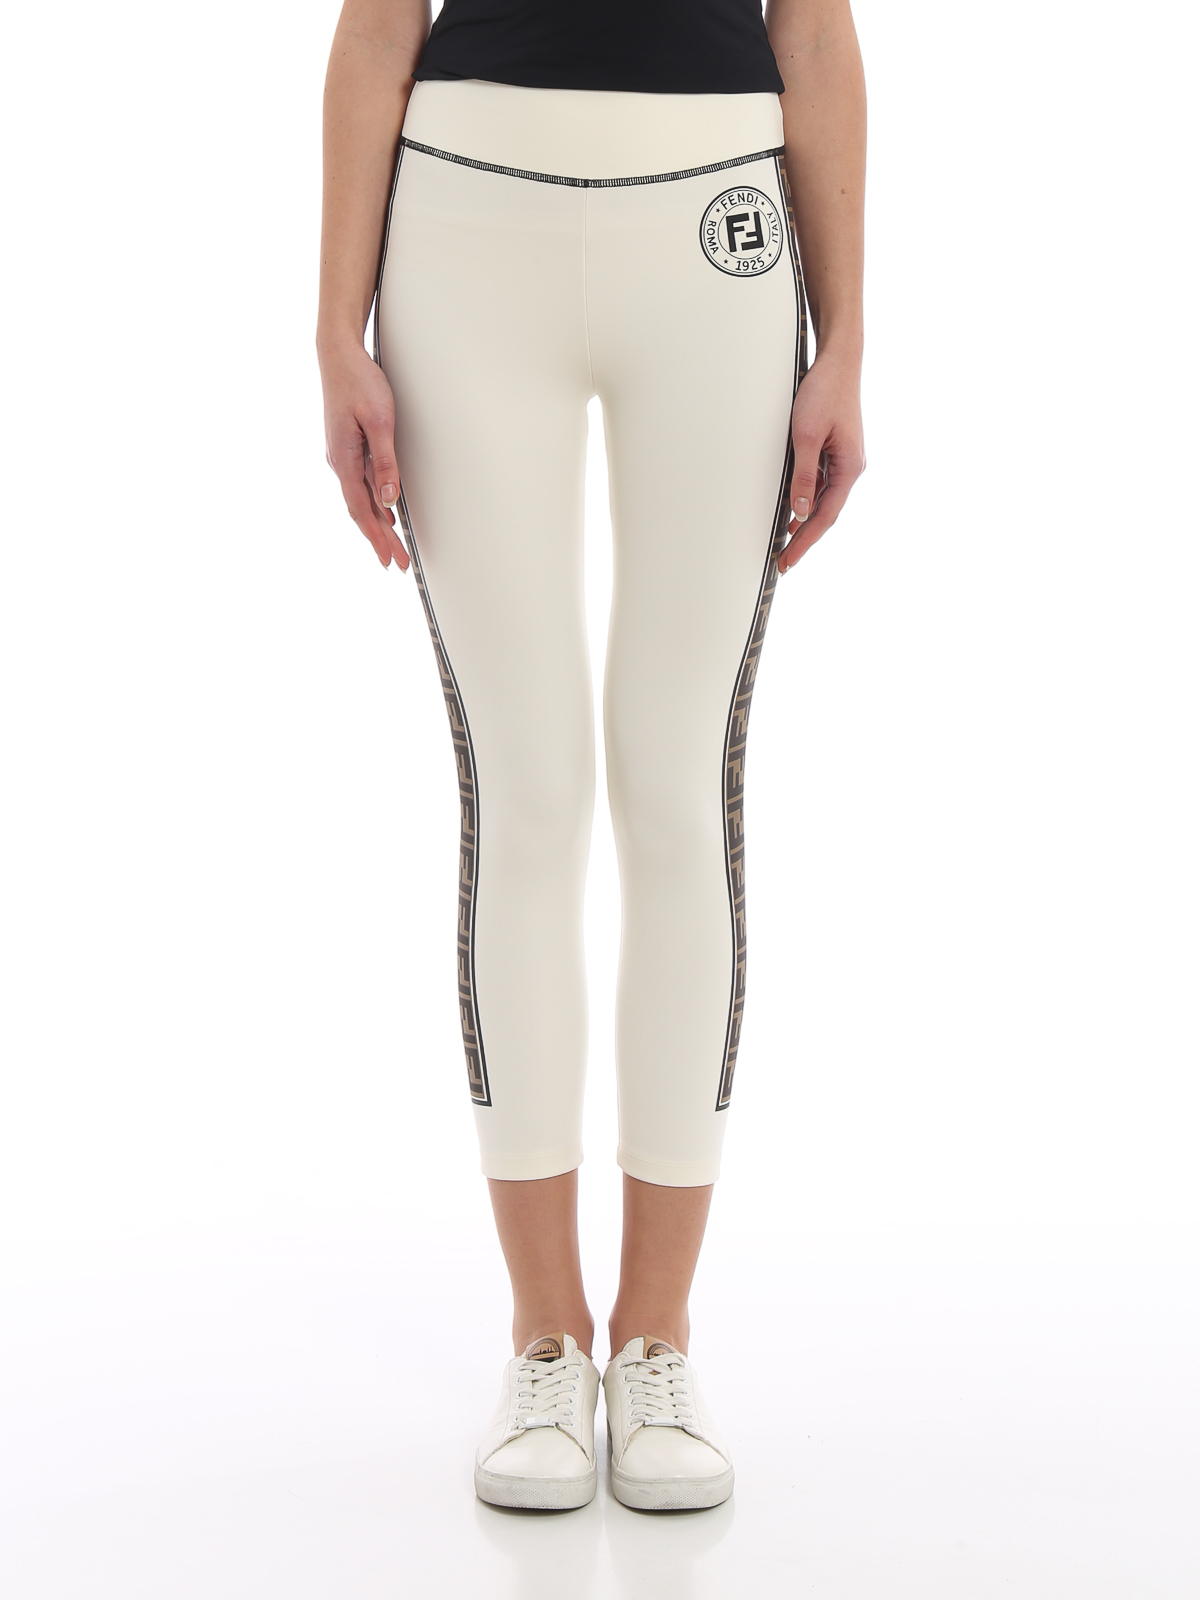 Fendi - Fendirama white leggings 